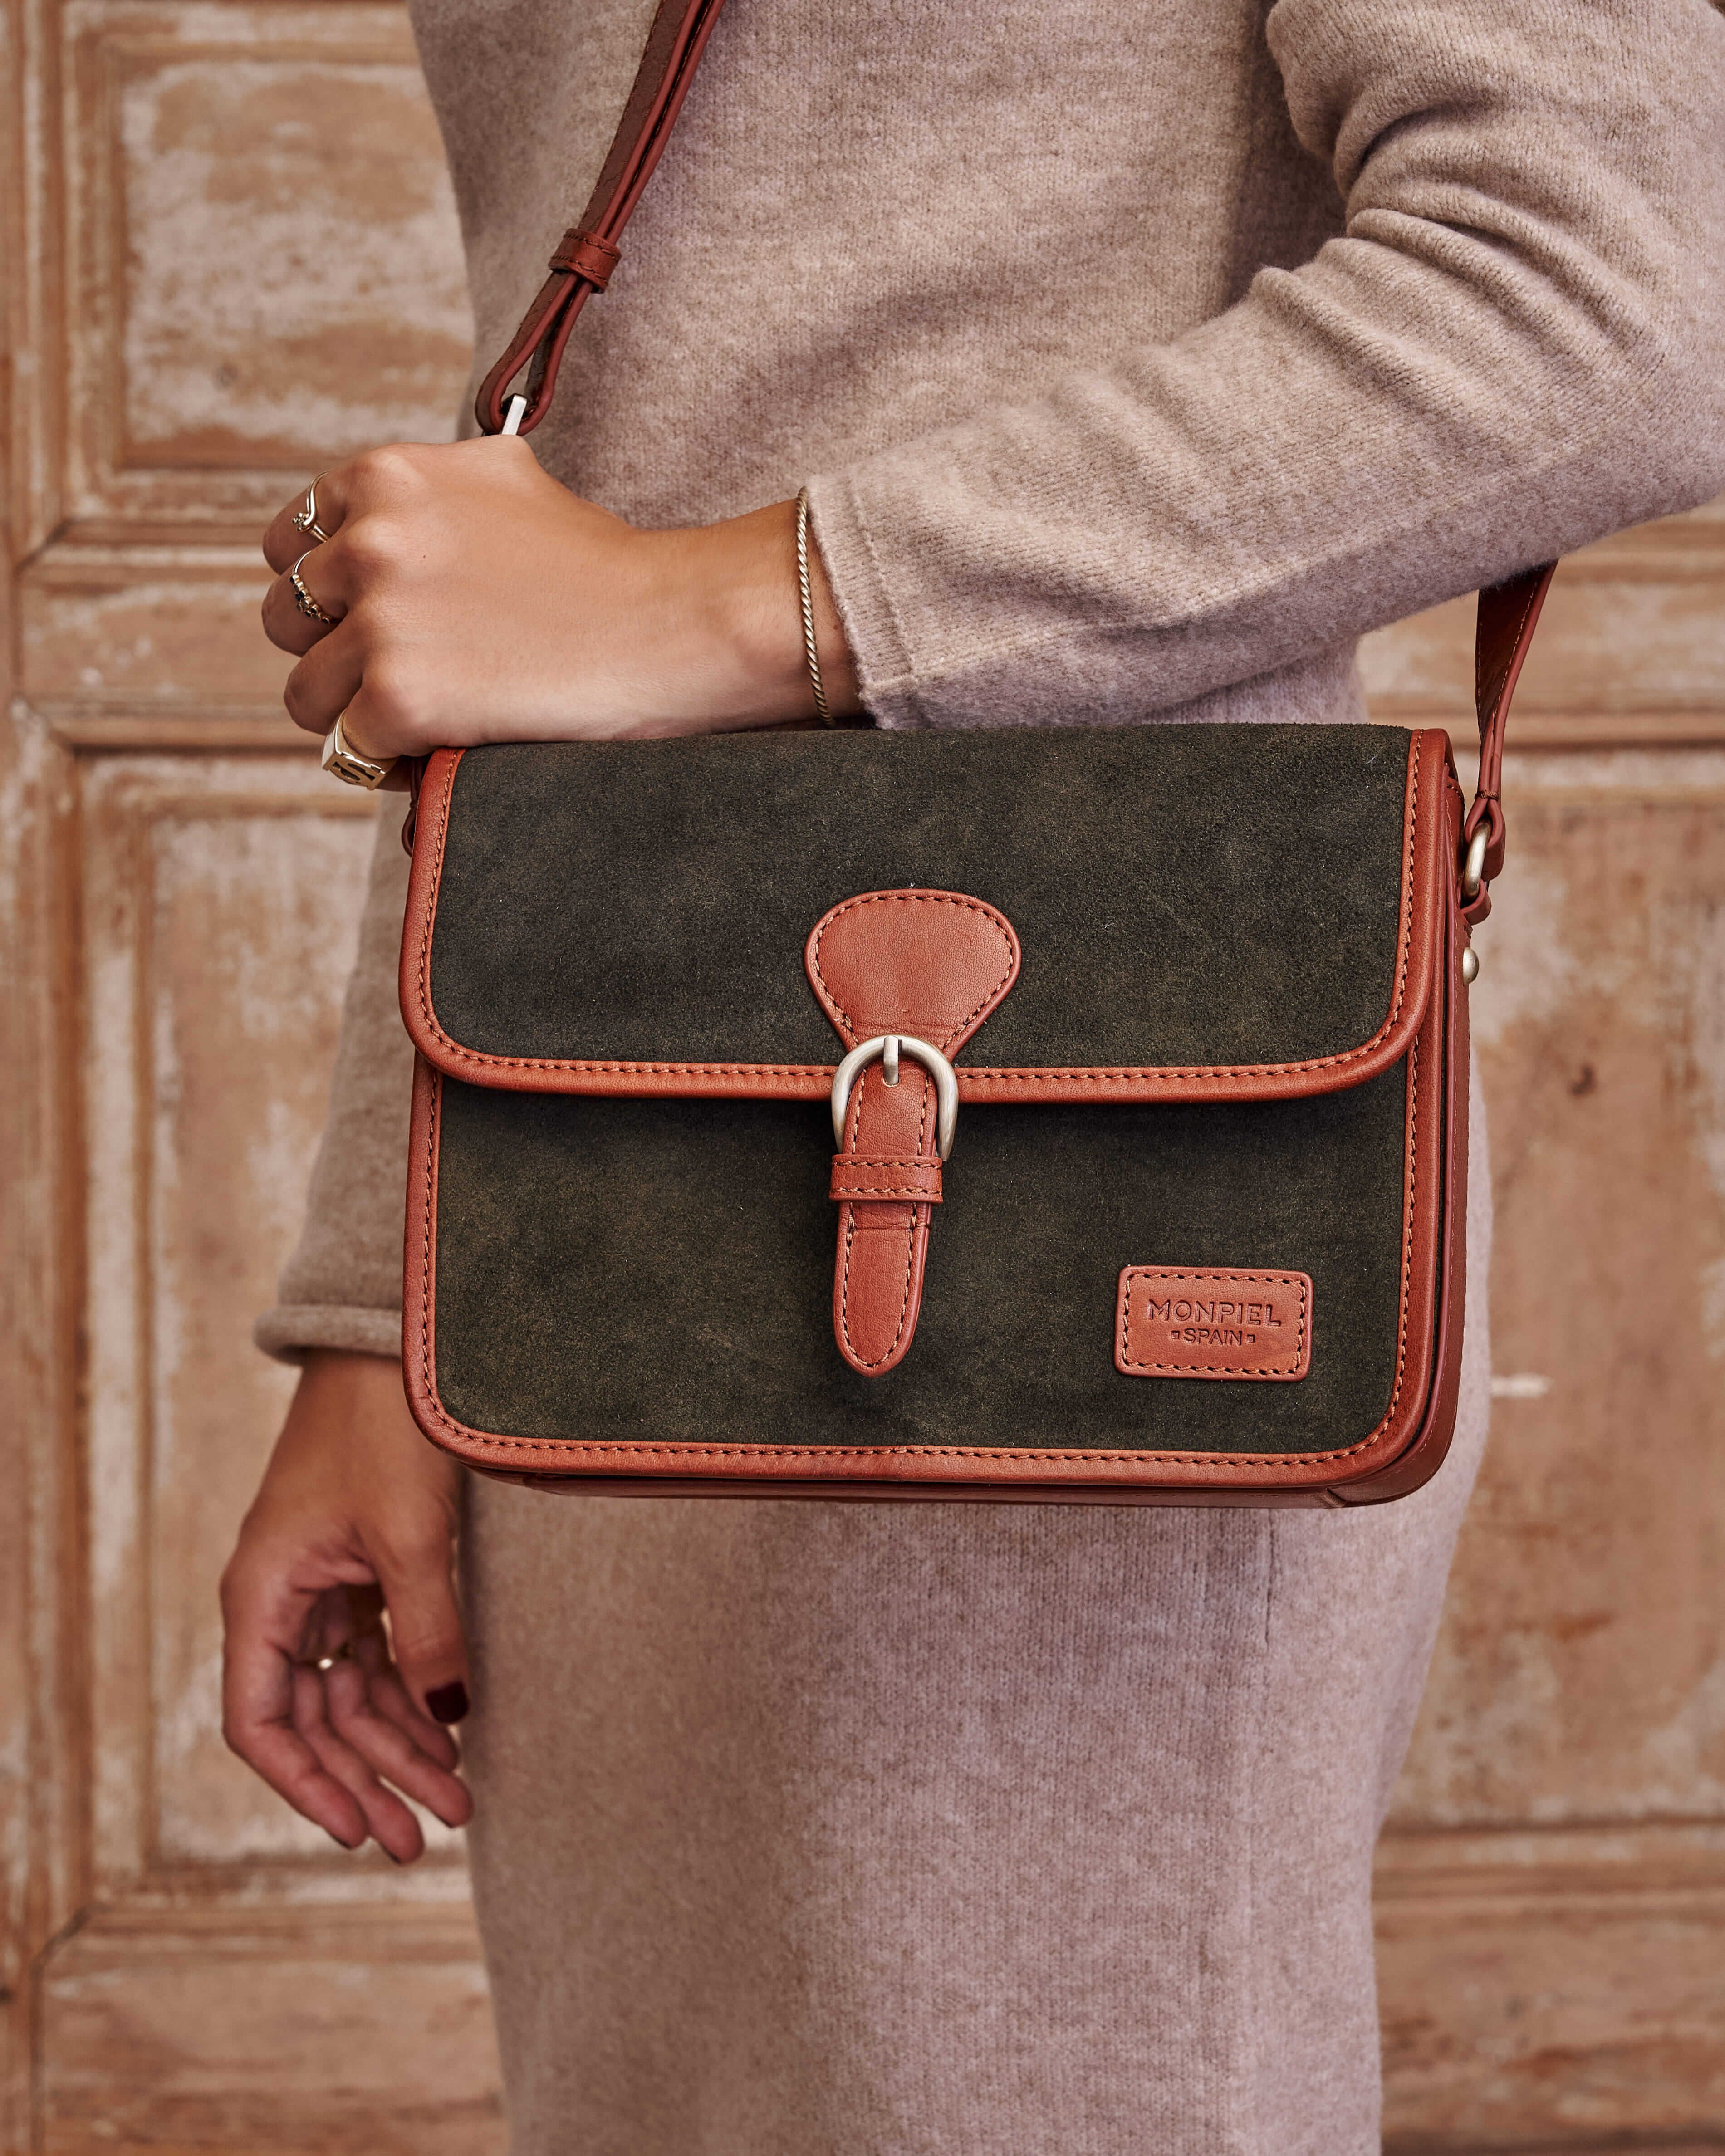 The Mini Pouch Metallic Leather Clutch By Bottega Veneta | Moda Operandi |  Fashion bags, Bottega veneta bag, Leather